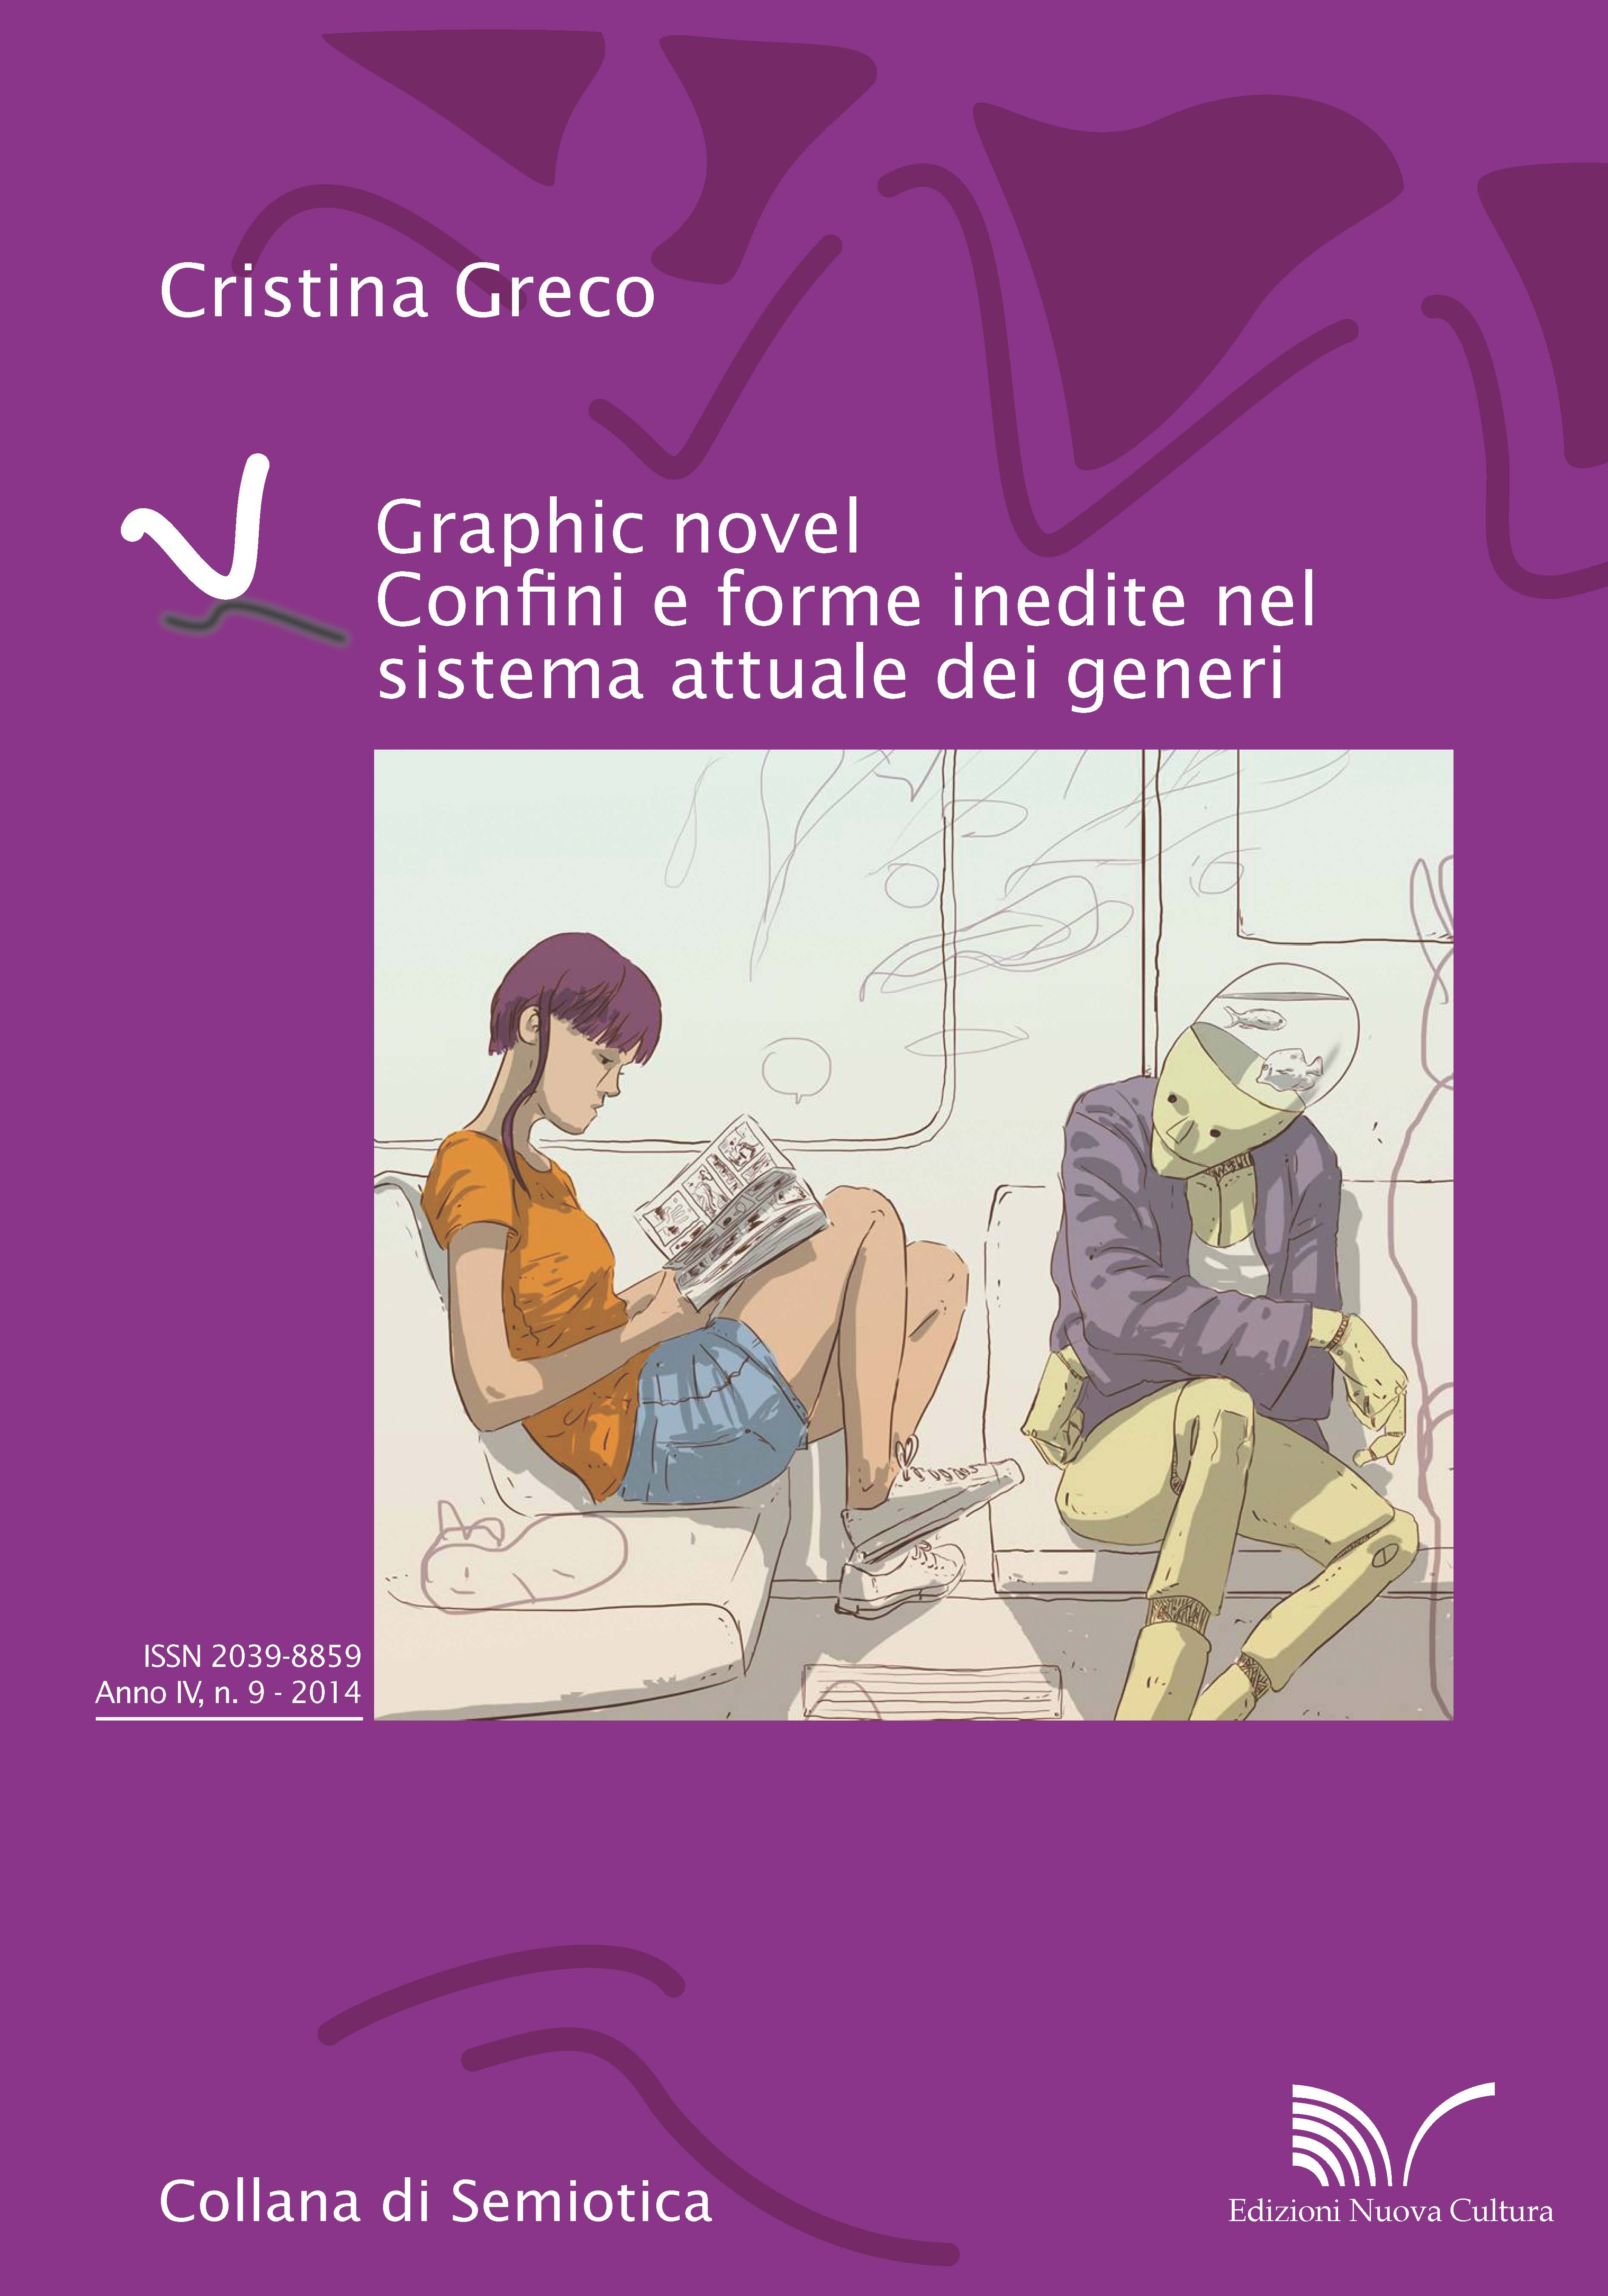 Cristina Greco presenta “Graphic Novel”